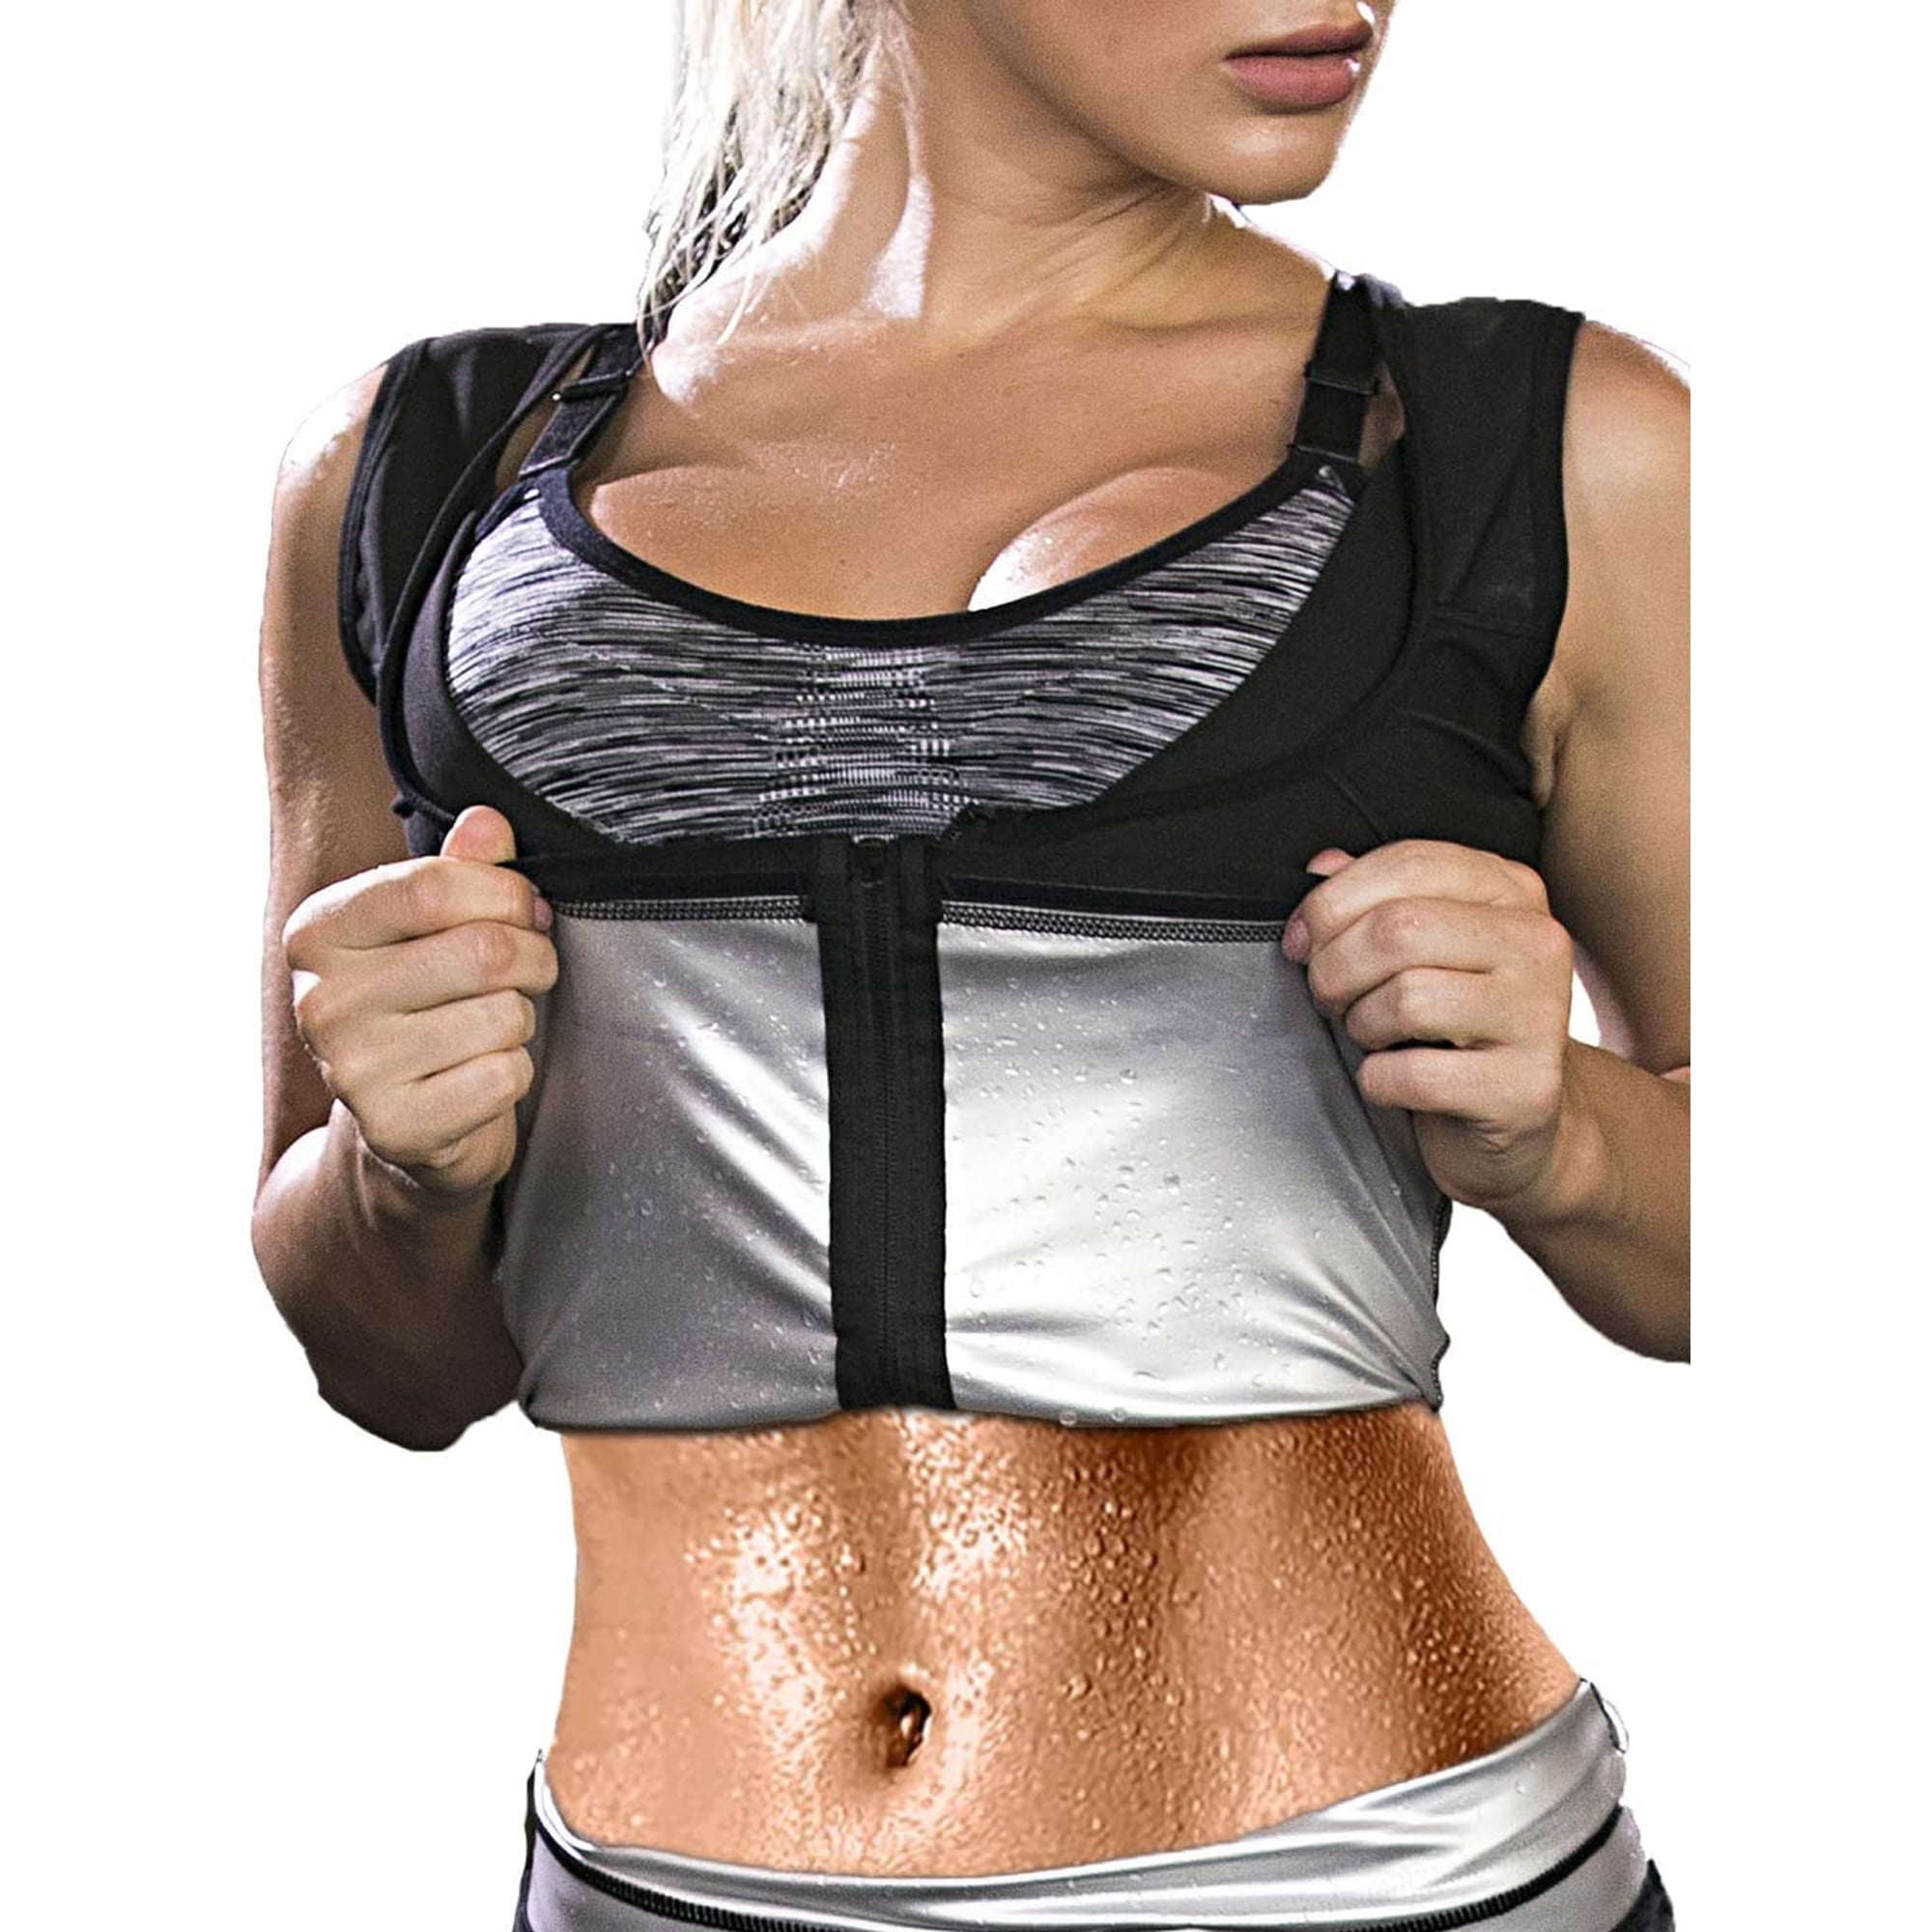 Sweat Body Shaper T Shirt Plus Size S-4XL Women Weight Loss Black Shapewear Neoprene Sauna Suit Waist Trainer Hot Thermo Slimming Cincher Corset